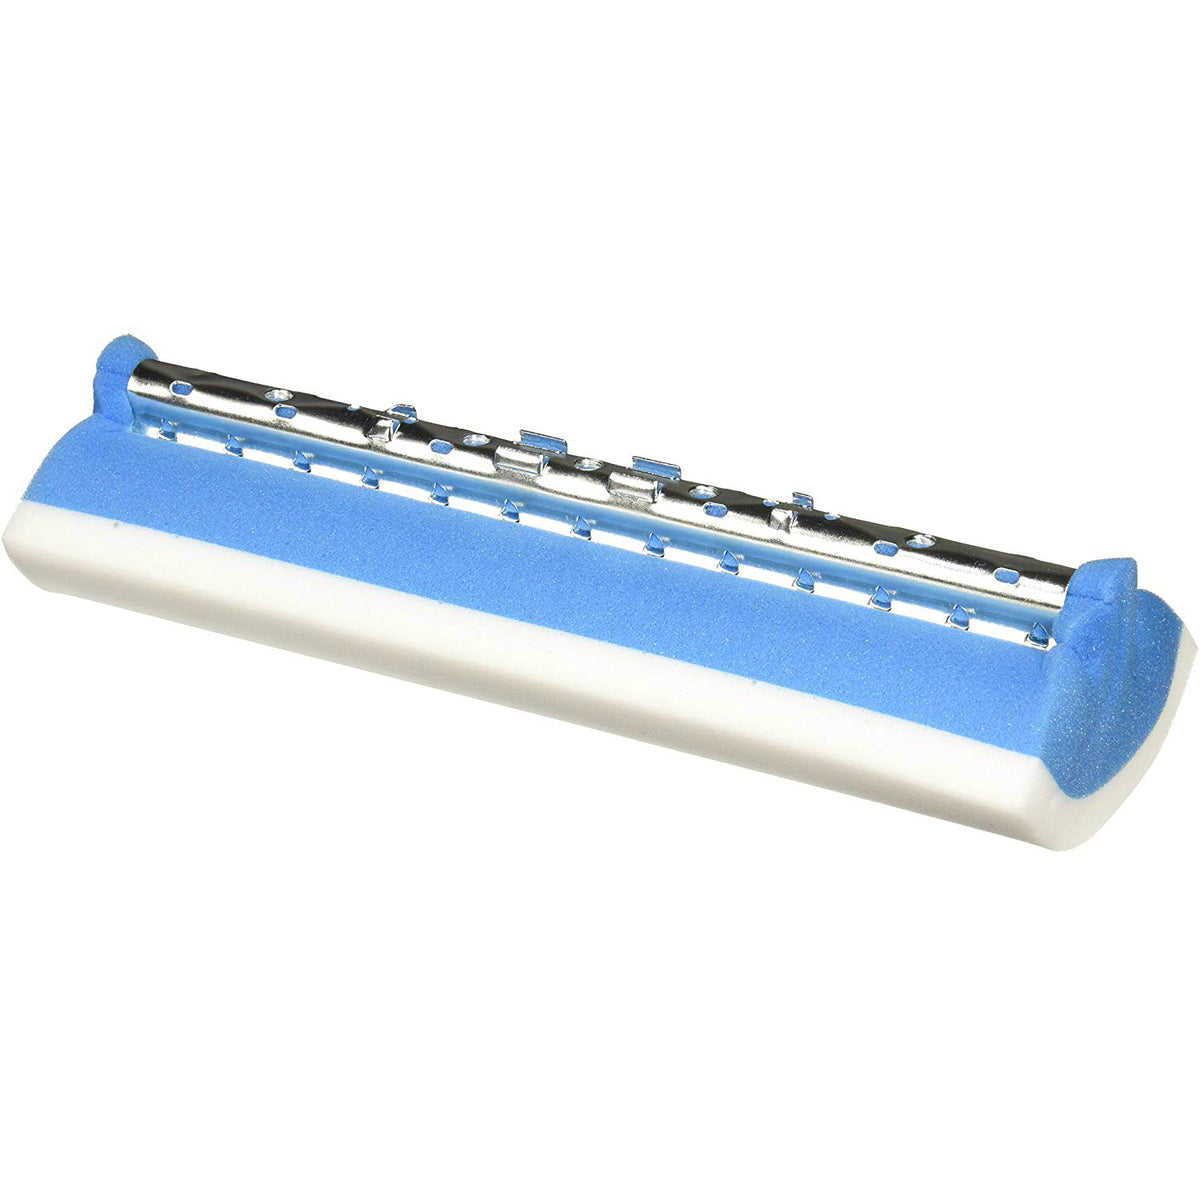 Mr Clean 446841 Magic Eraser Refill for The Magic Eraser Roller Mop